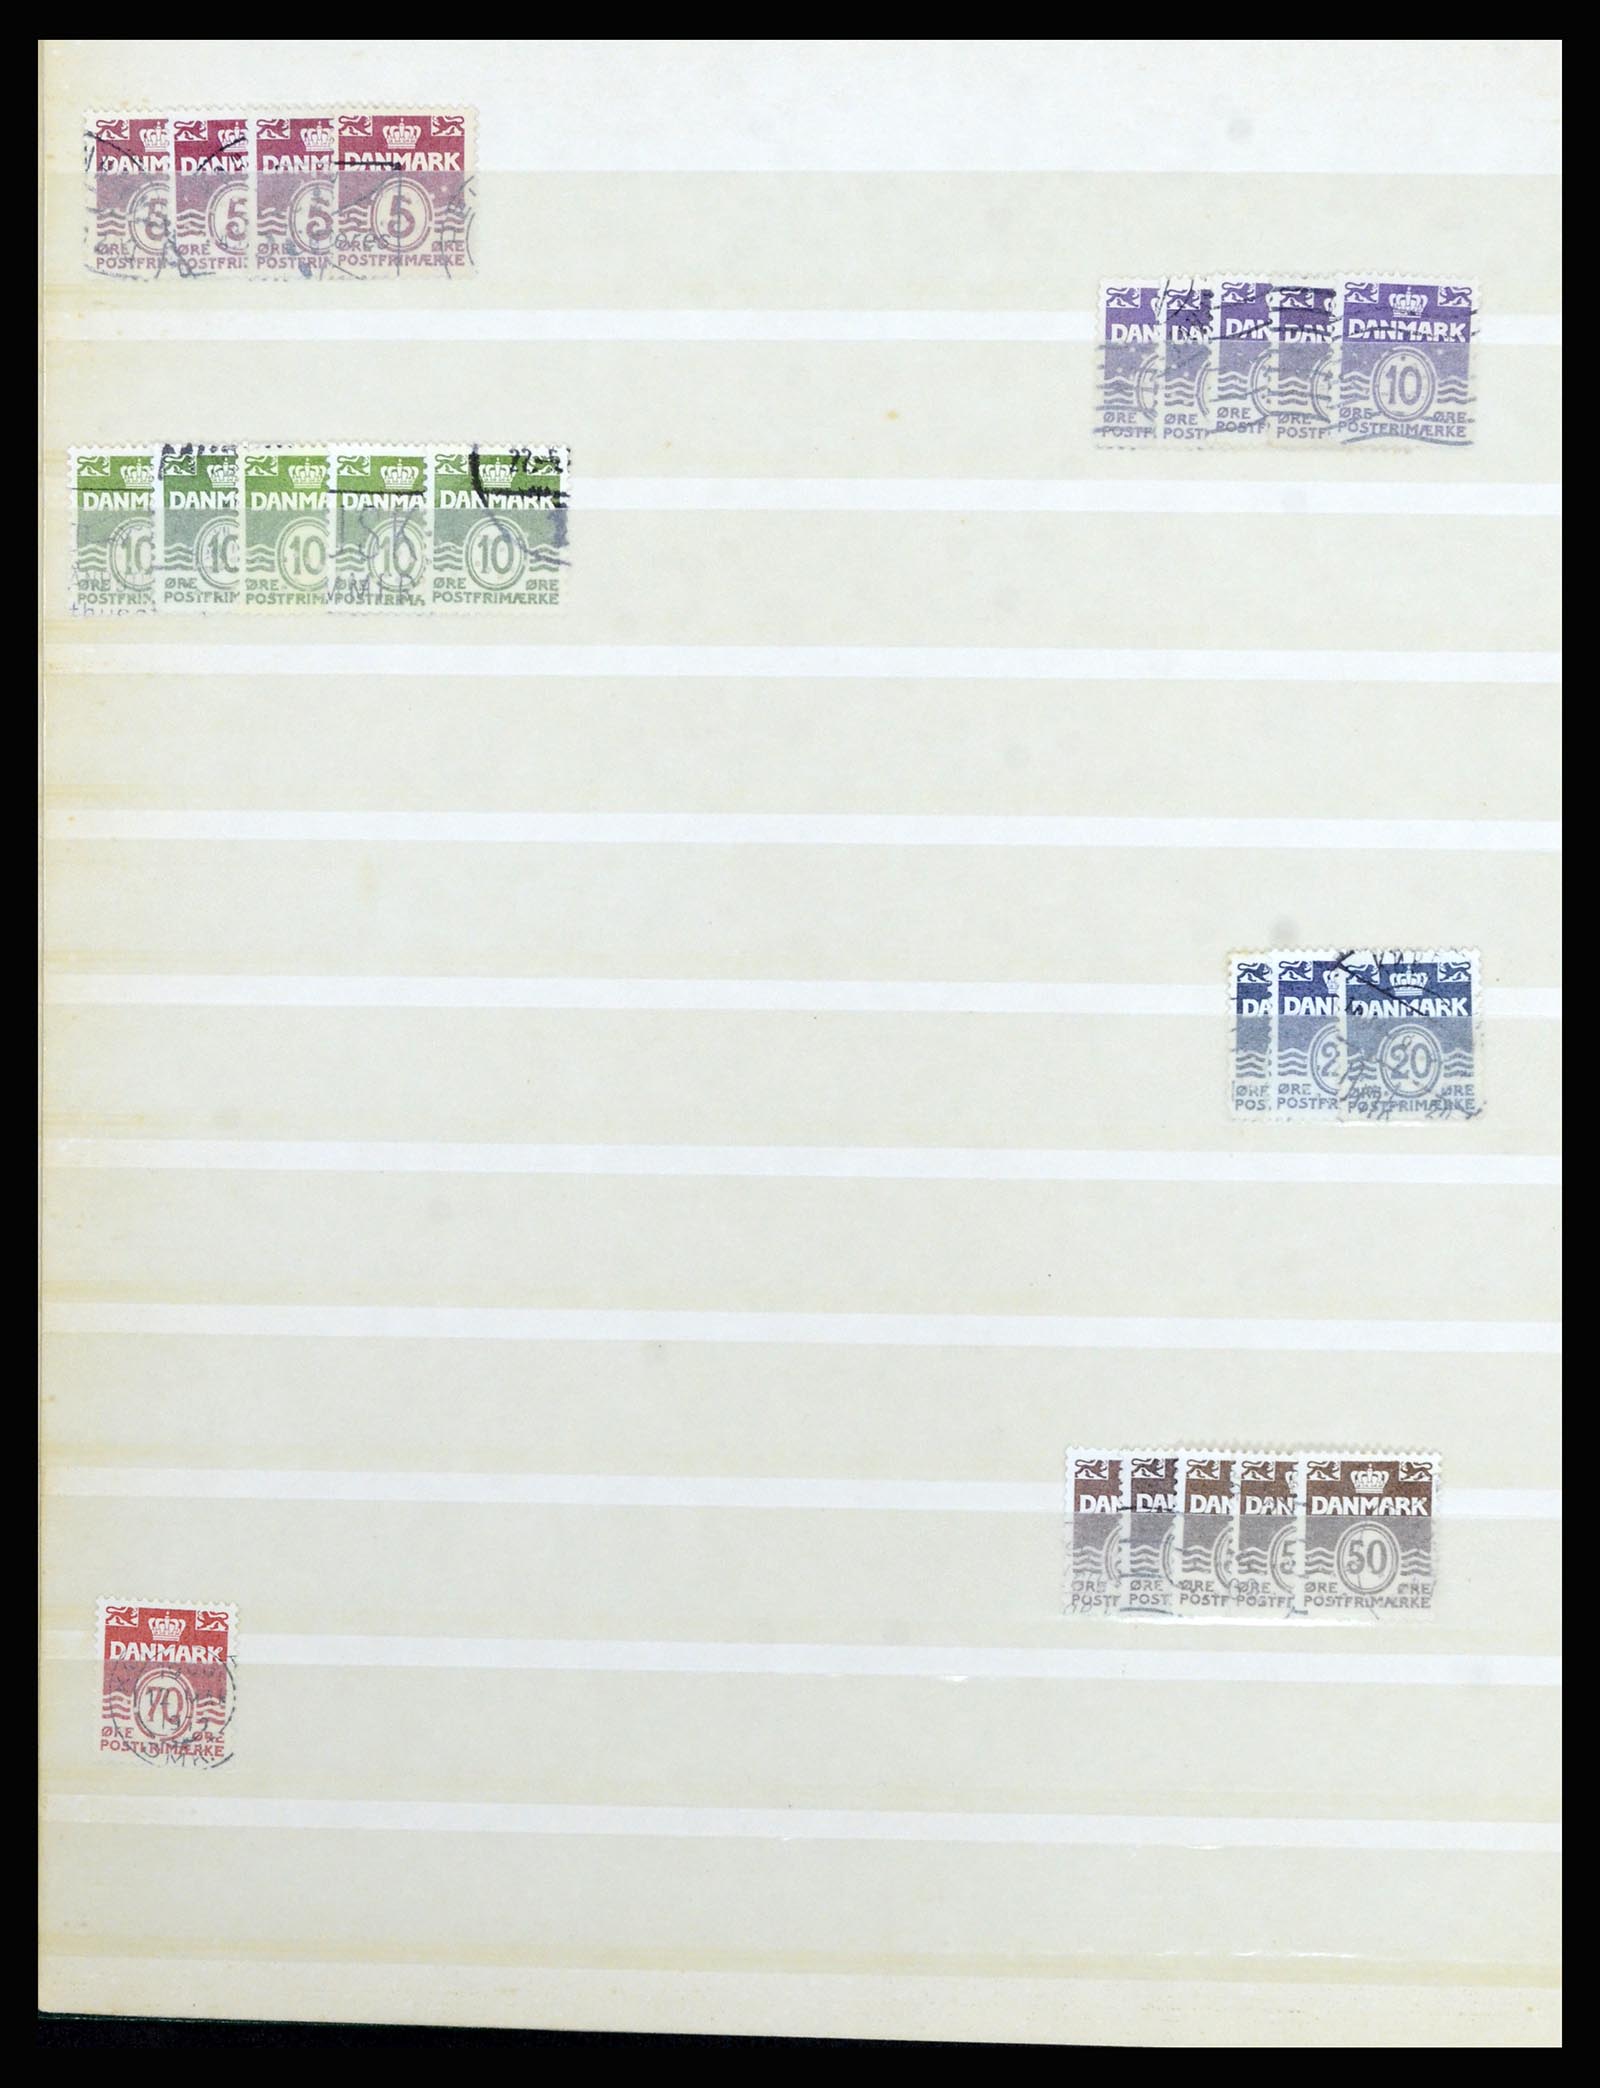 37056 094 - Stamp collection 37056 Denmark perfins.